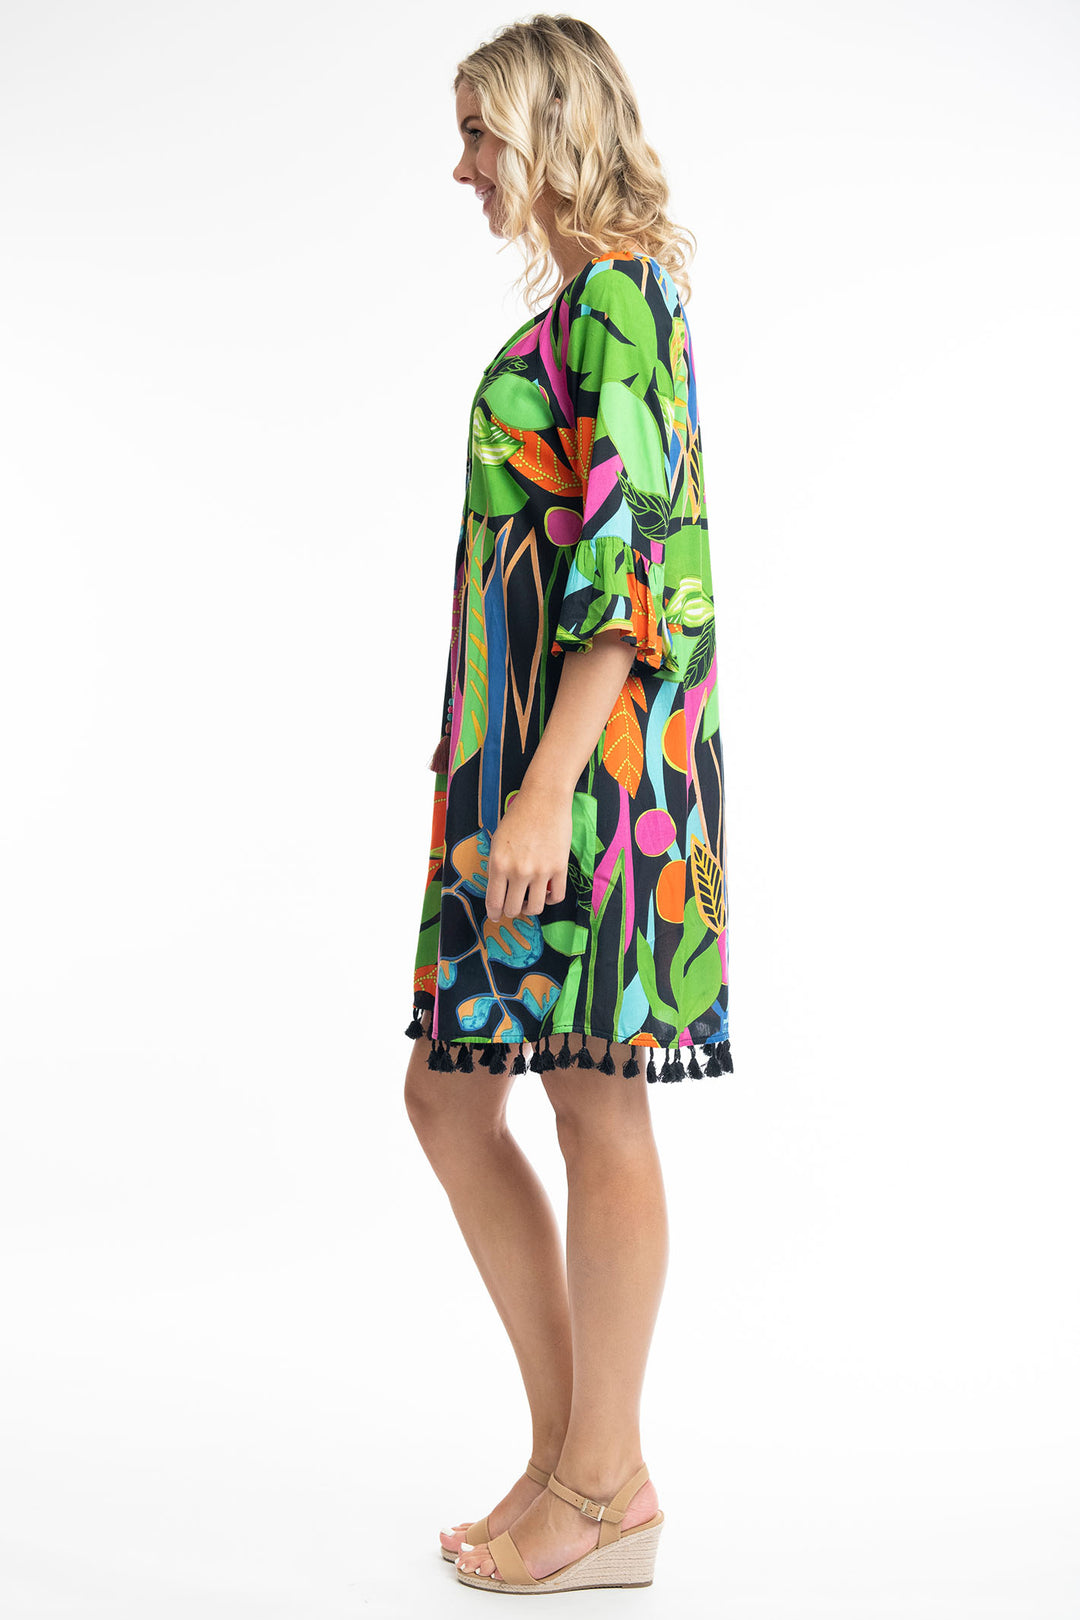 Orientique O9184 Nicossia Black Tropical Print Tassel Dress - Experience Boutique